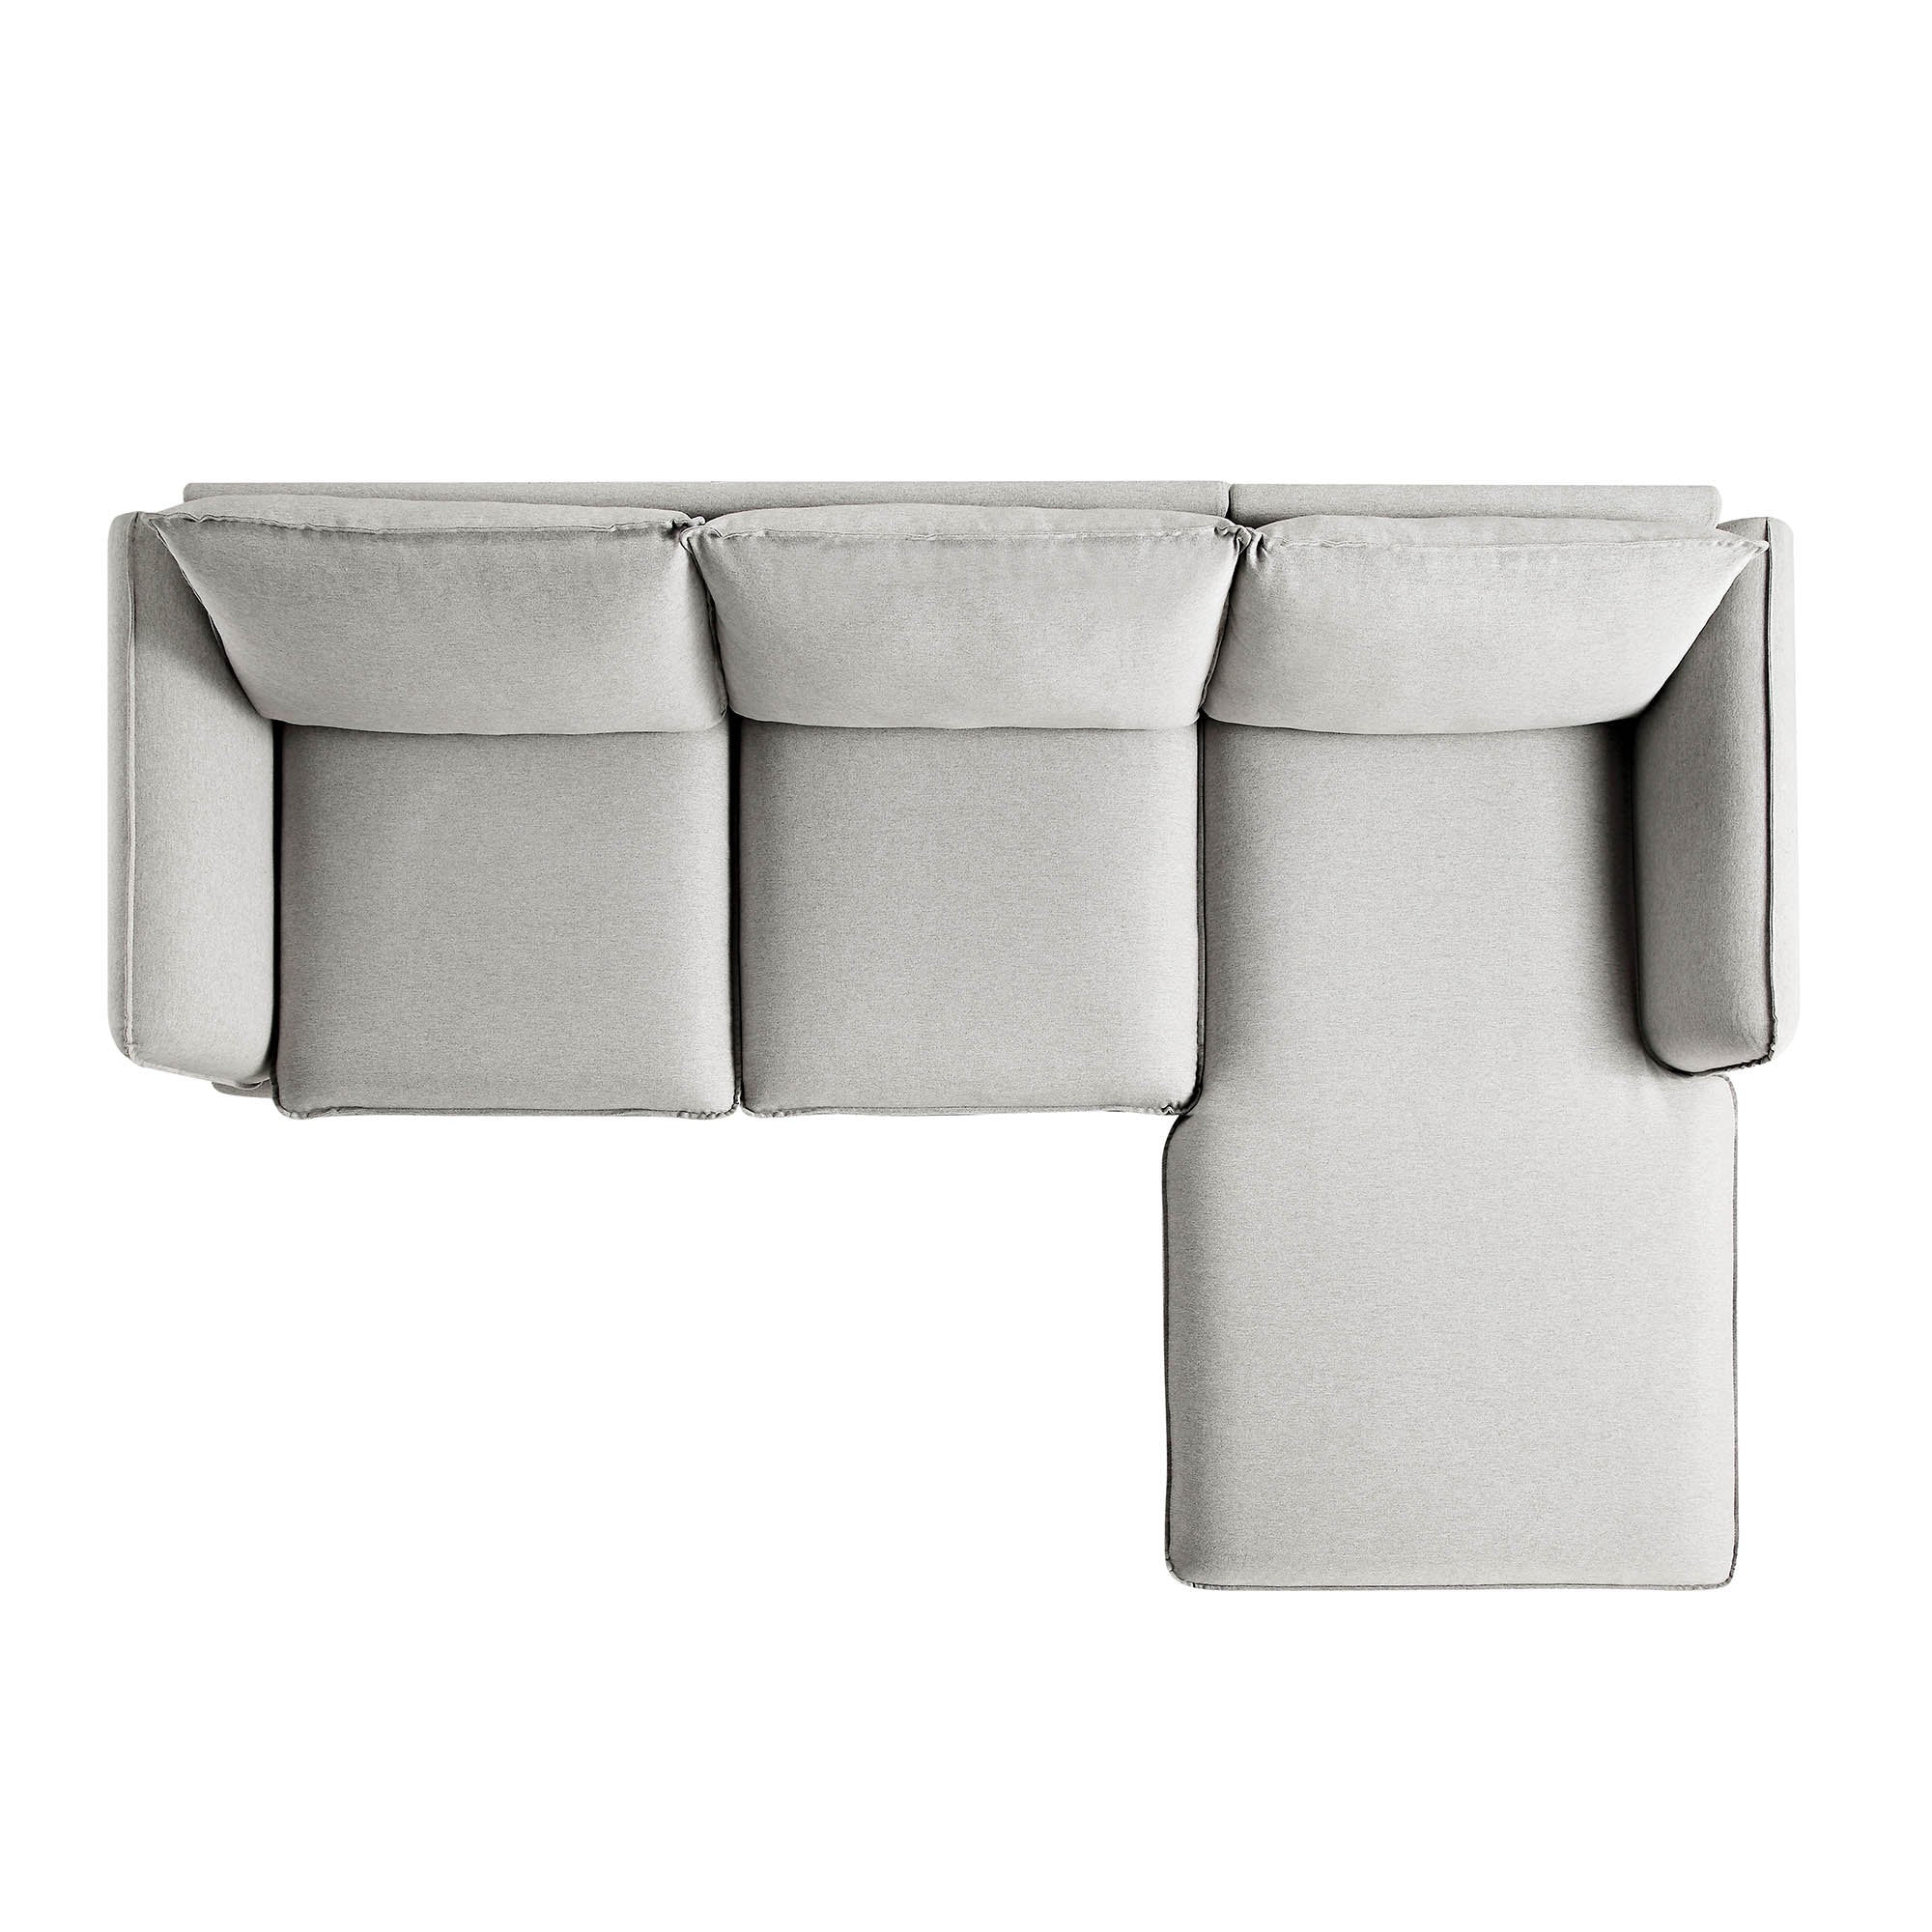 Obriel Grey Marl Fabric Sofa, Grande Chaise Sofa Right Hand